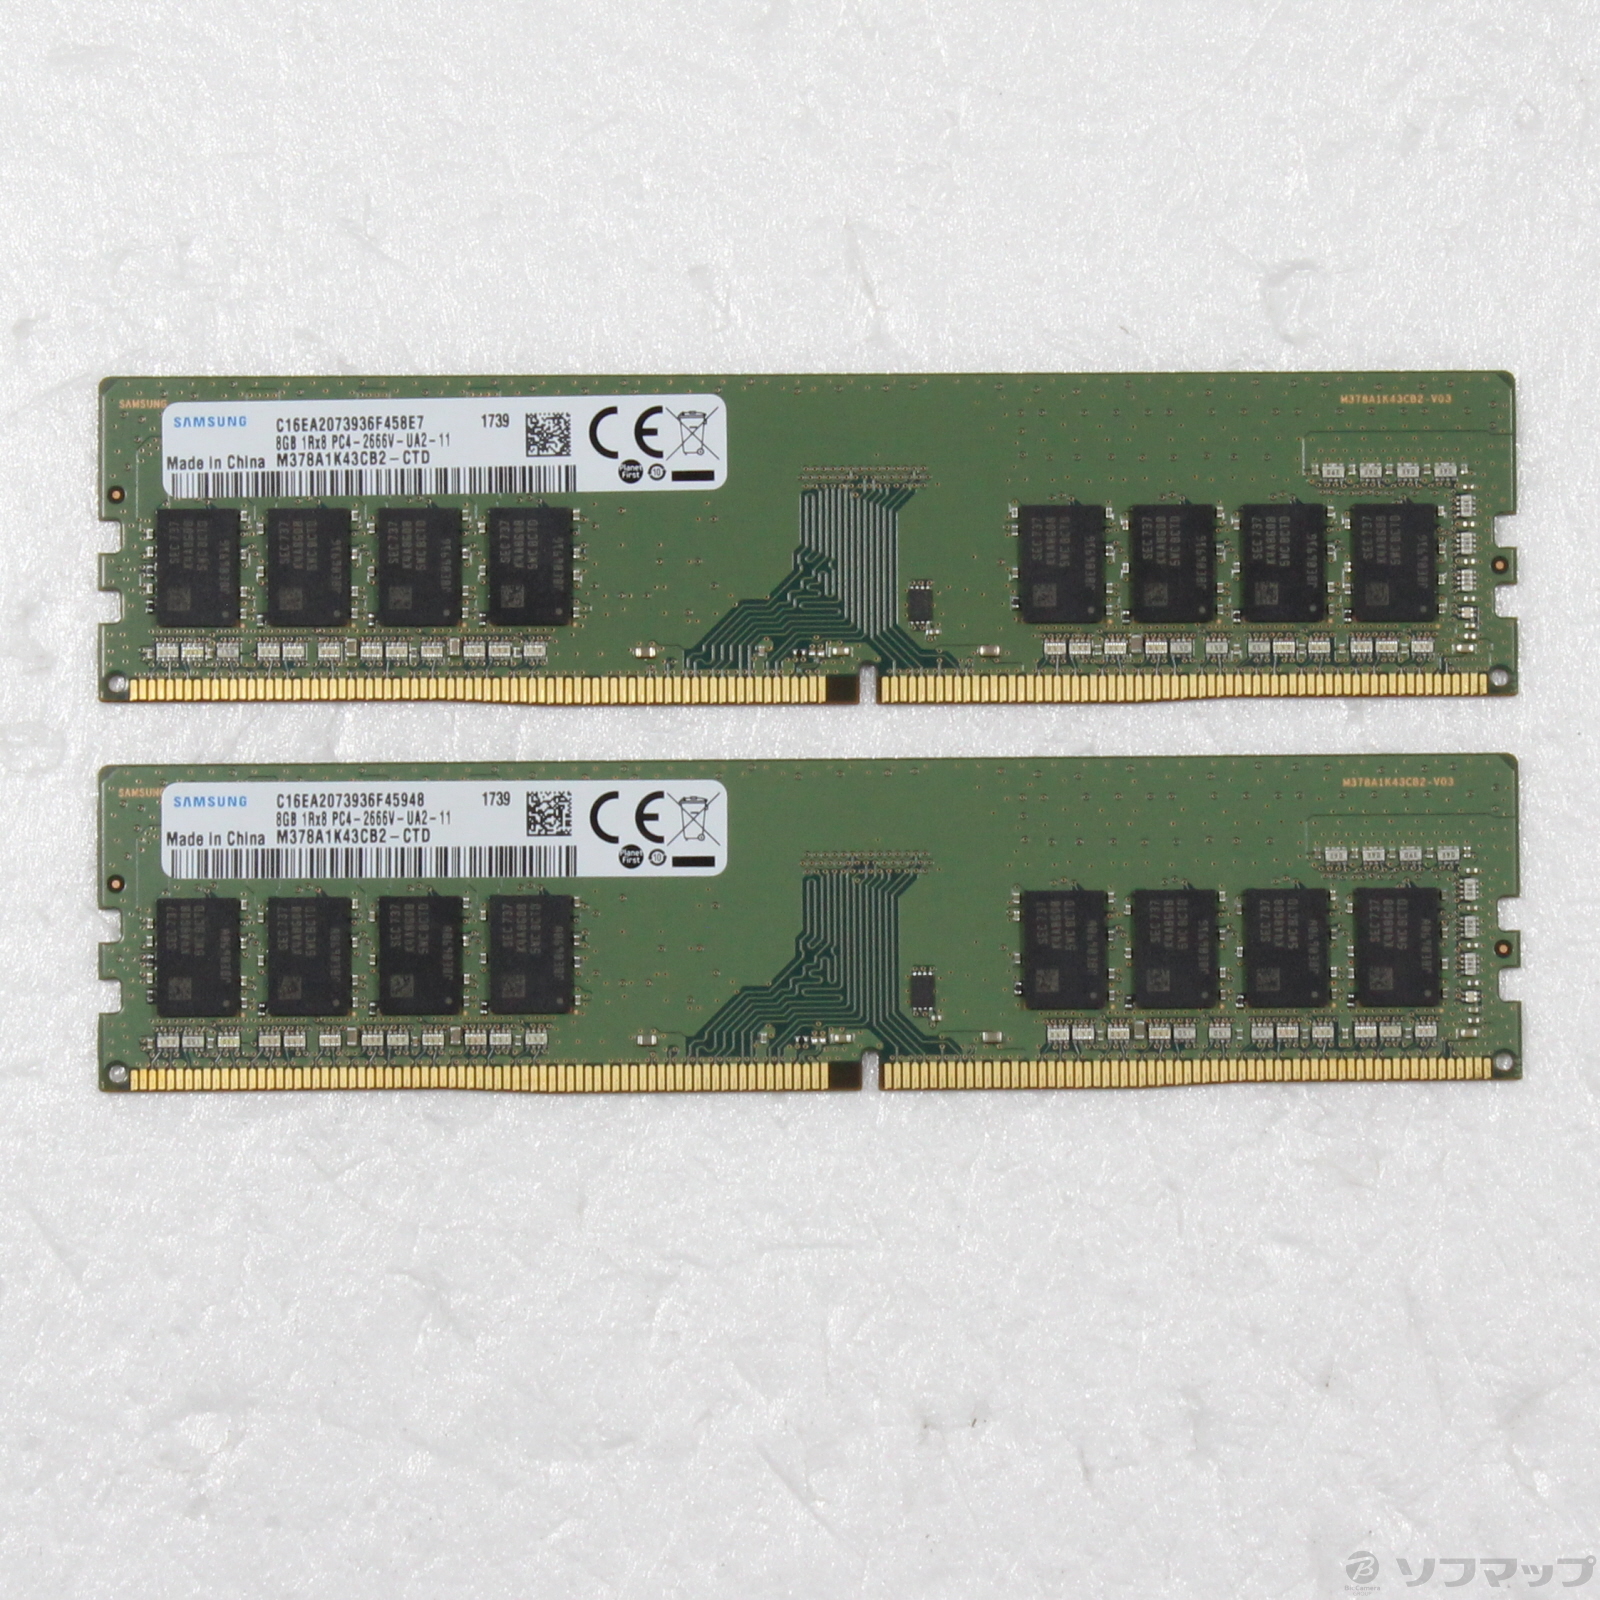 中古】288P PC4-21300 DDR4-2666 16GB 8GB×2枚組 [2133044860113